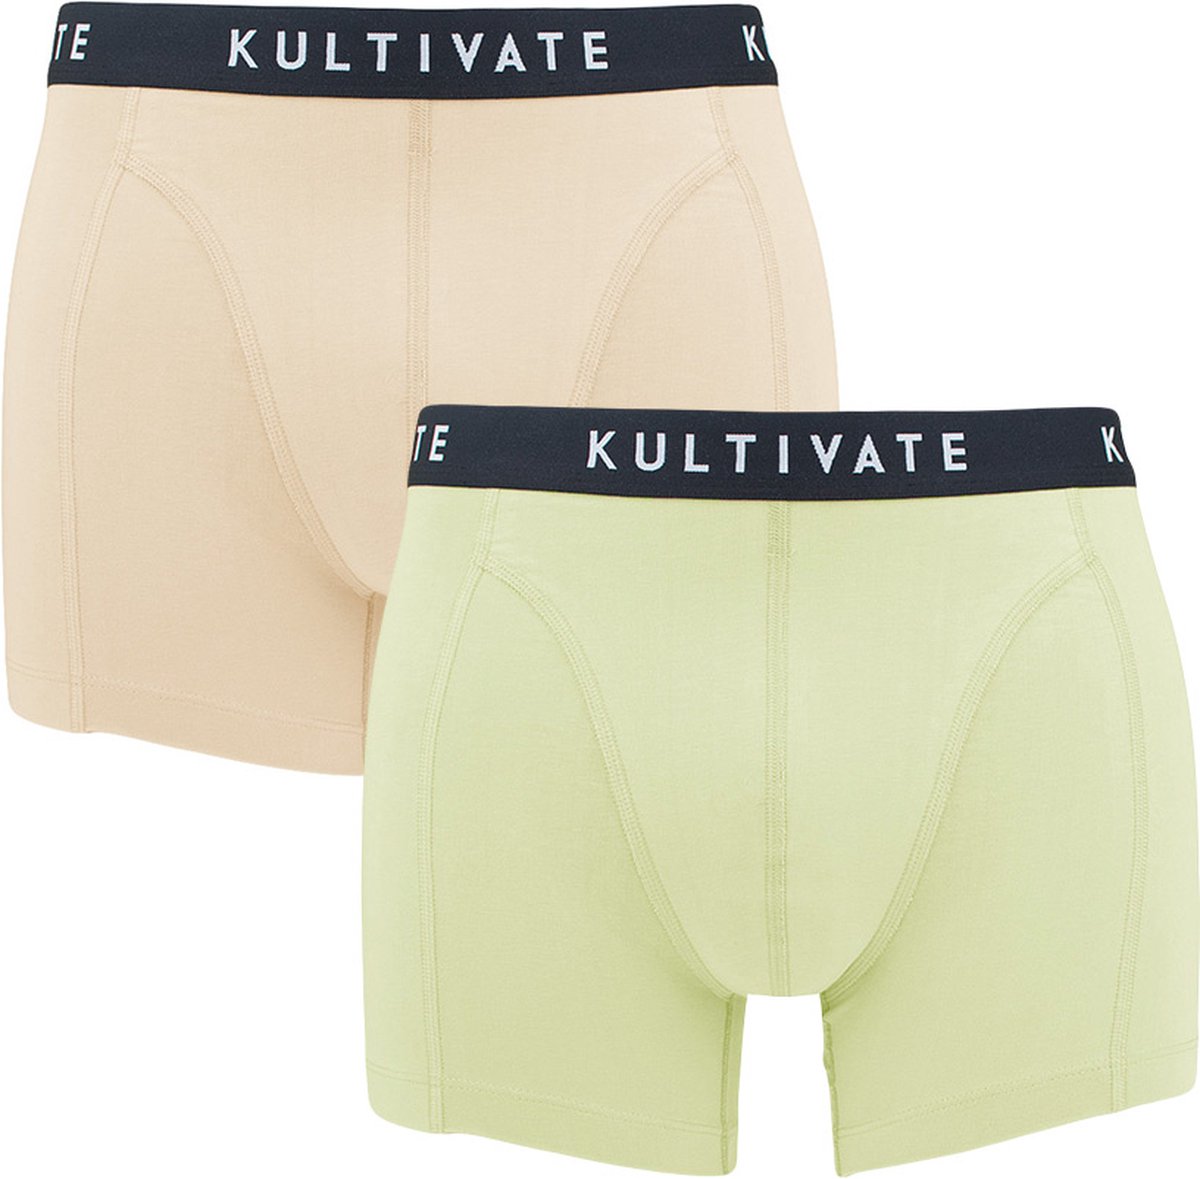 Kultivate basic 2P boxers groen & beige - L